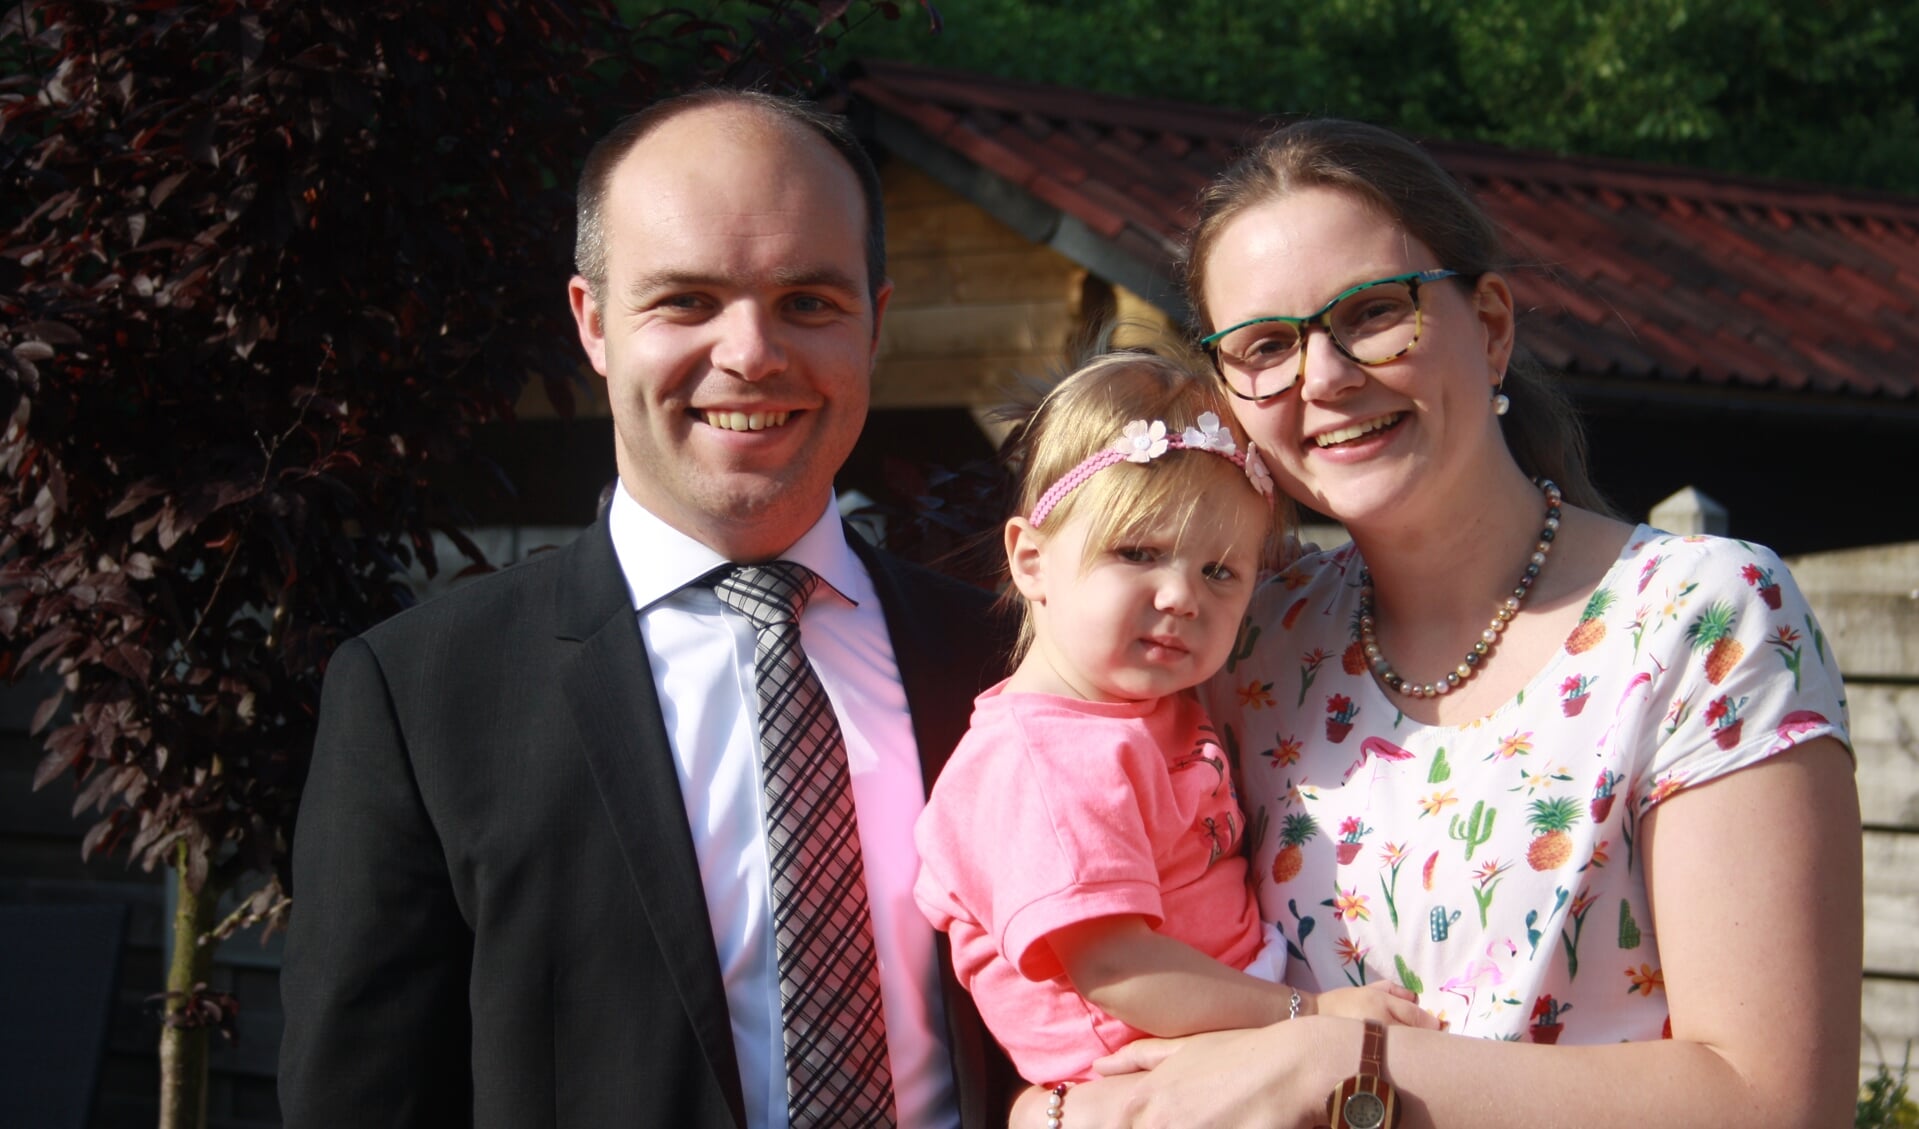 Kandidaat 't Hart met vrouw Marlize en dochtertje Anna-Sophie FOTO FRITS SIMONS